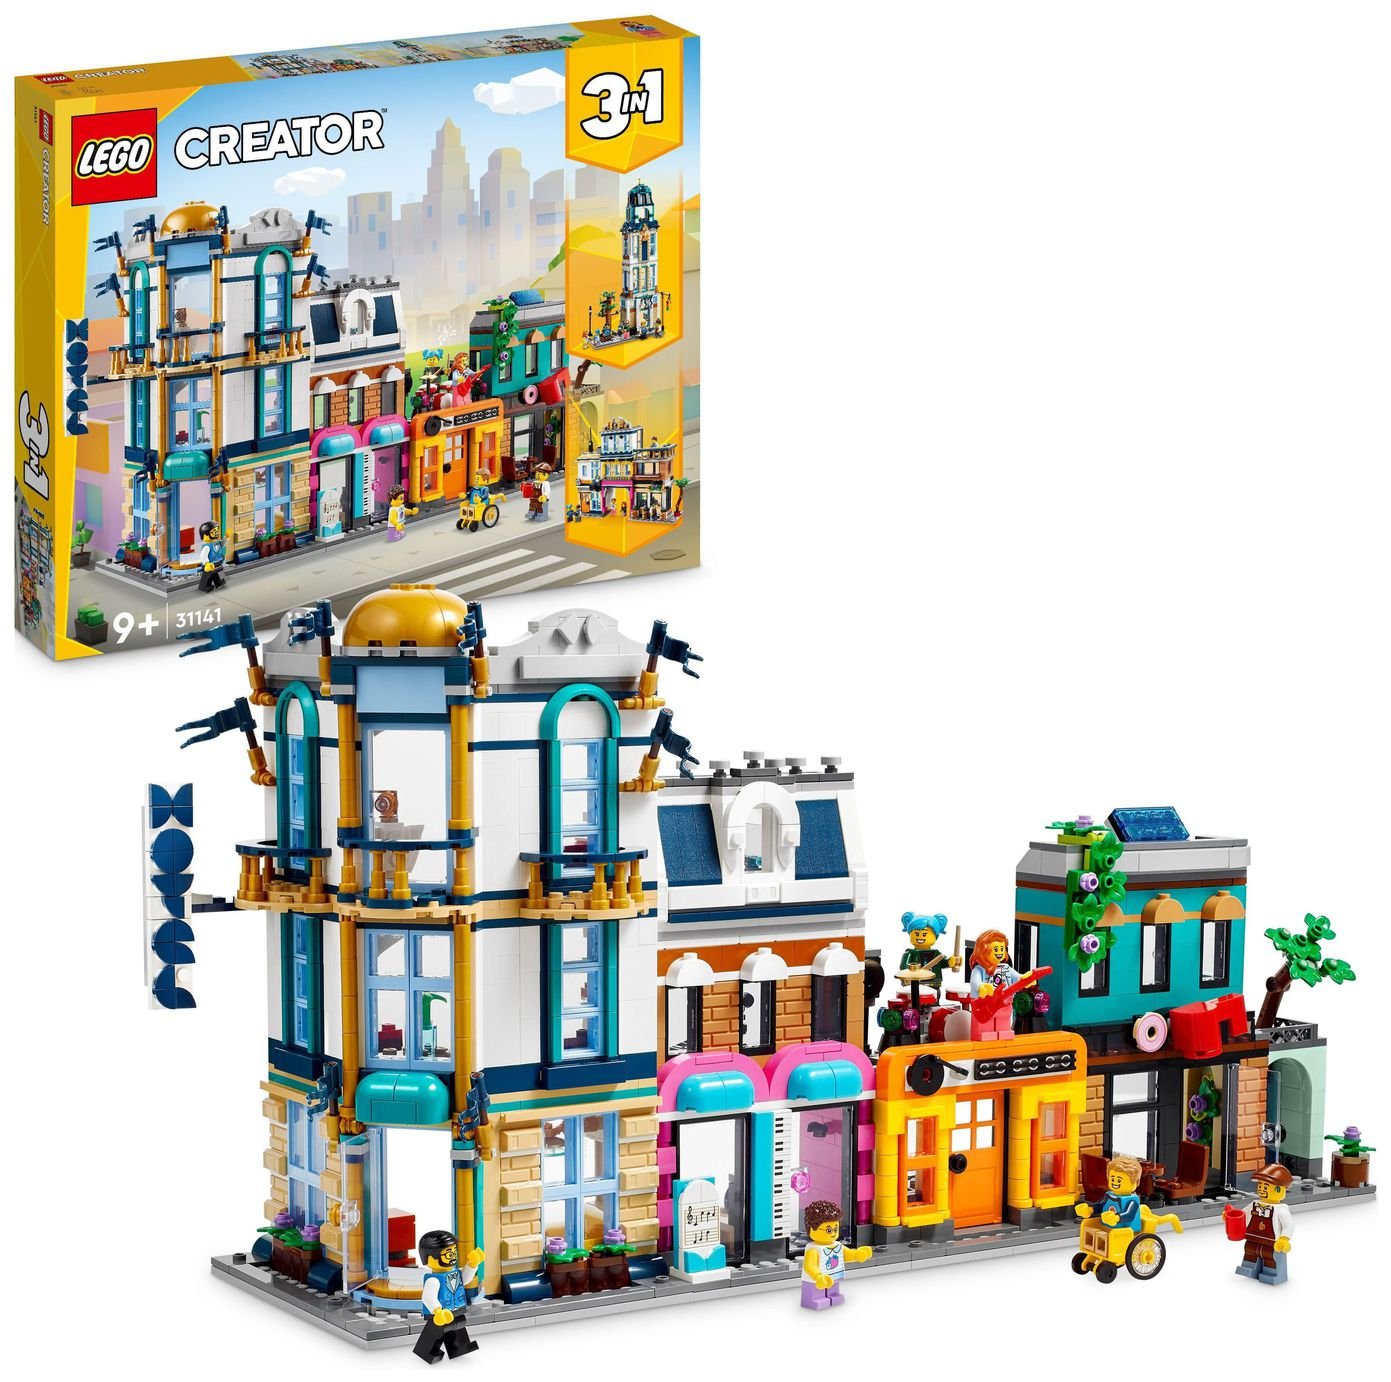 LEGO Creator 3in1 Main Street Model Building Set 31141